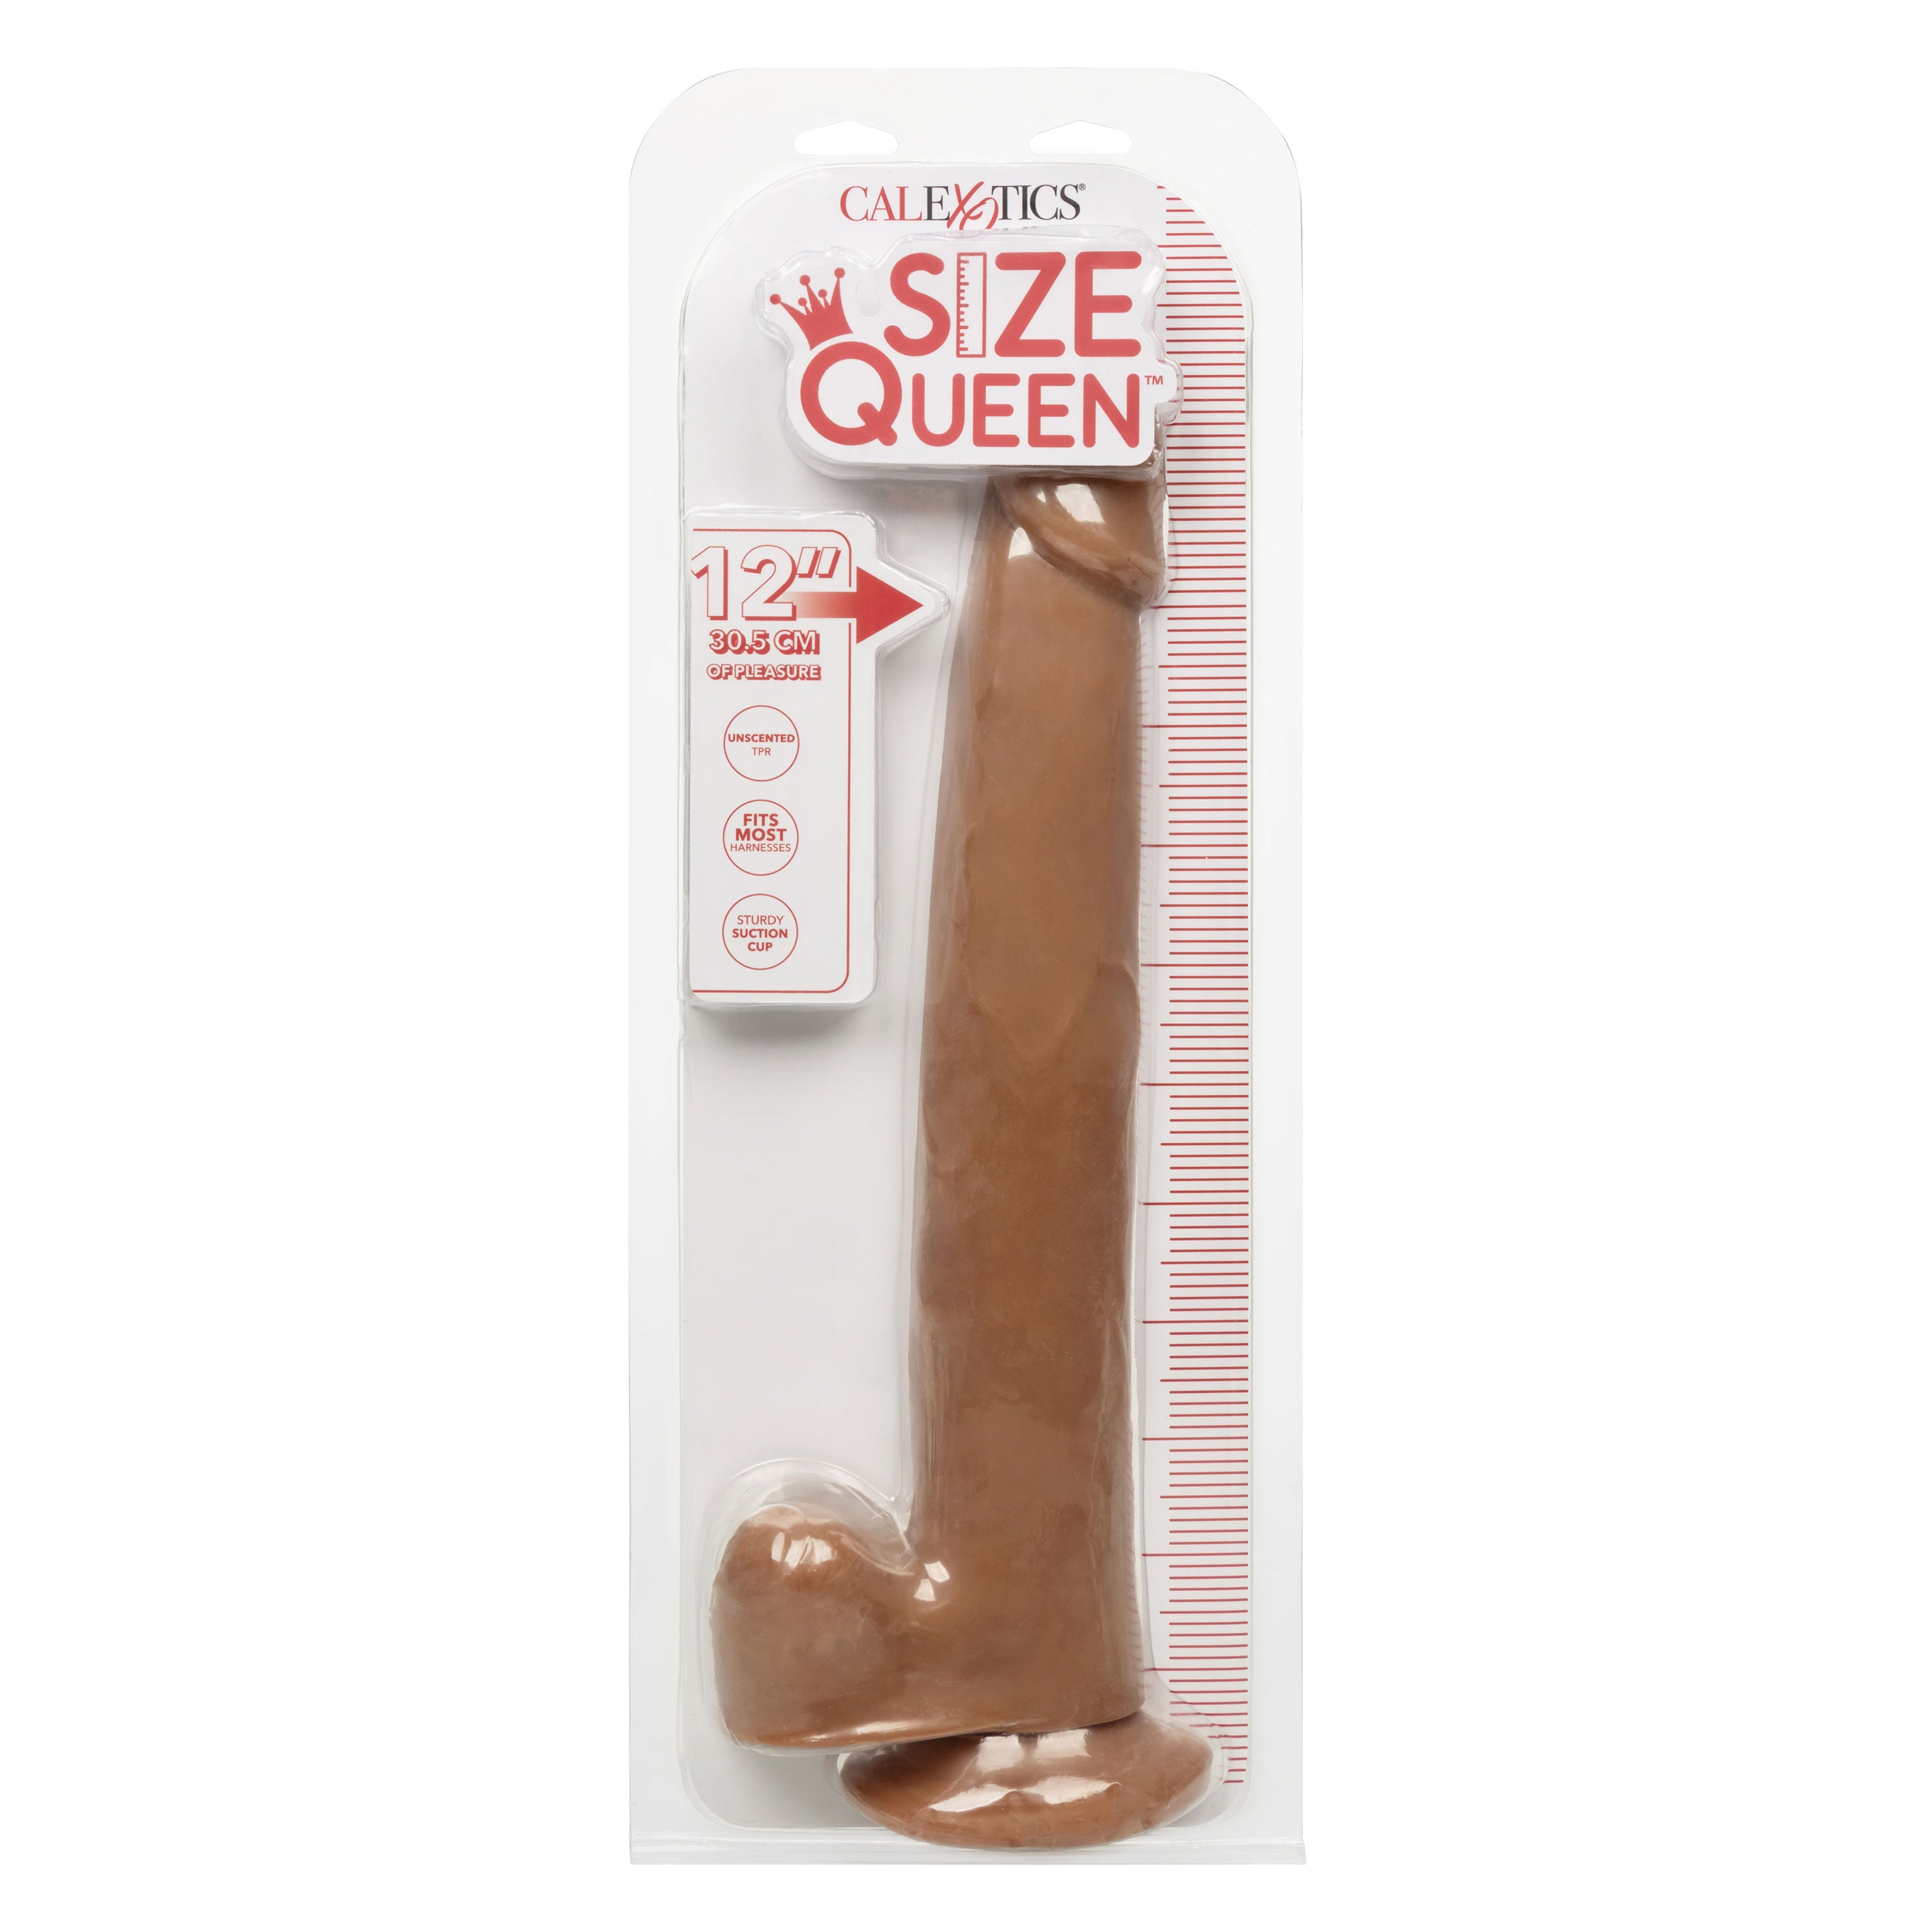 Size Queen 12 inch/30.5 Cm - Brown